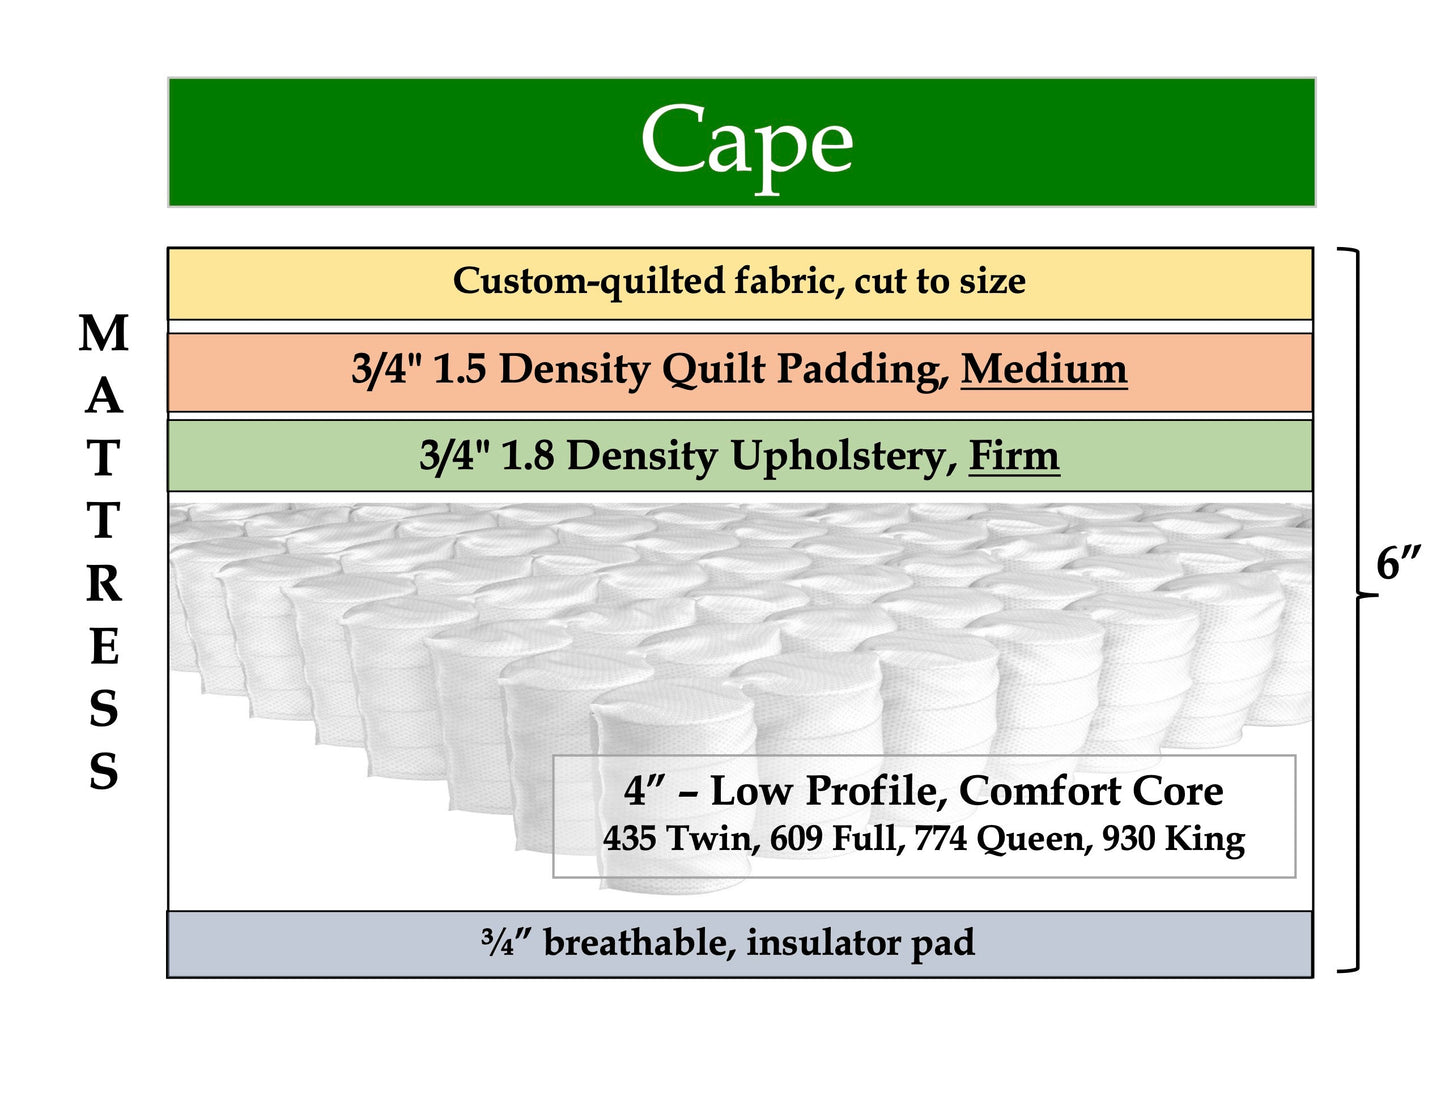 Cape Hybrid - 30" x 68" mattress (w/ 1" extra-firm padding)